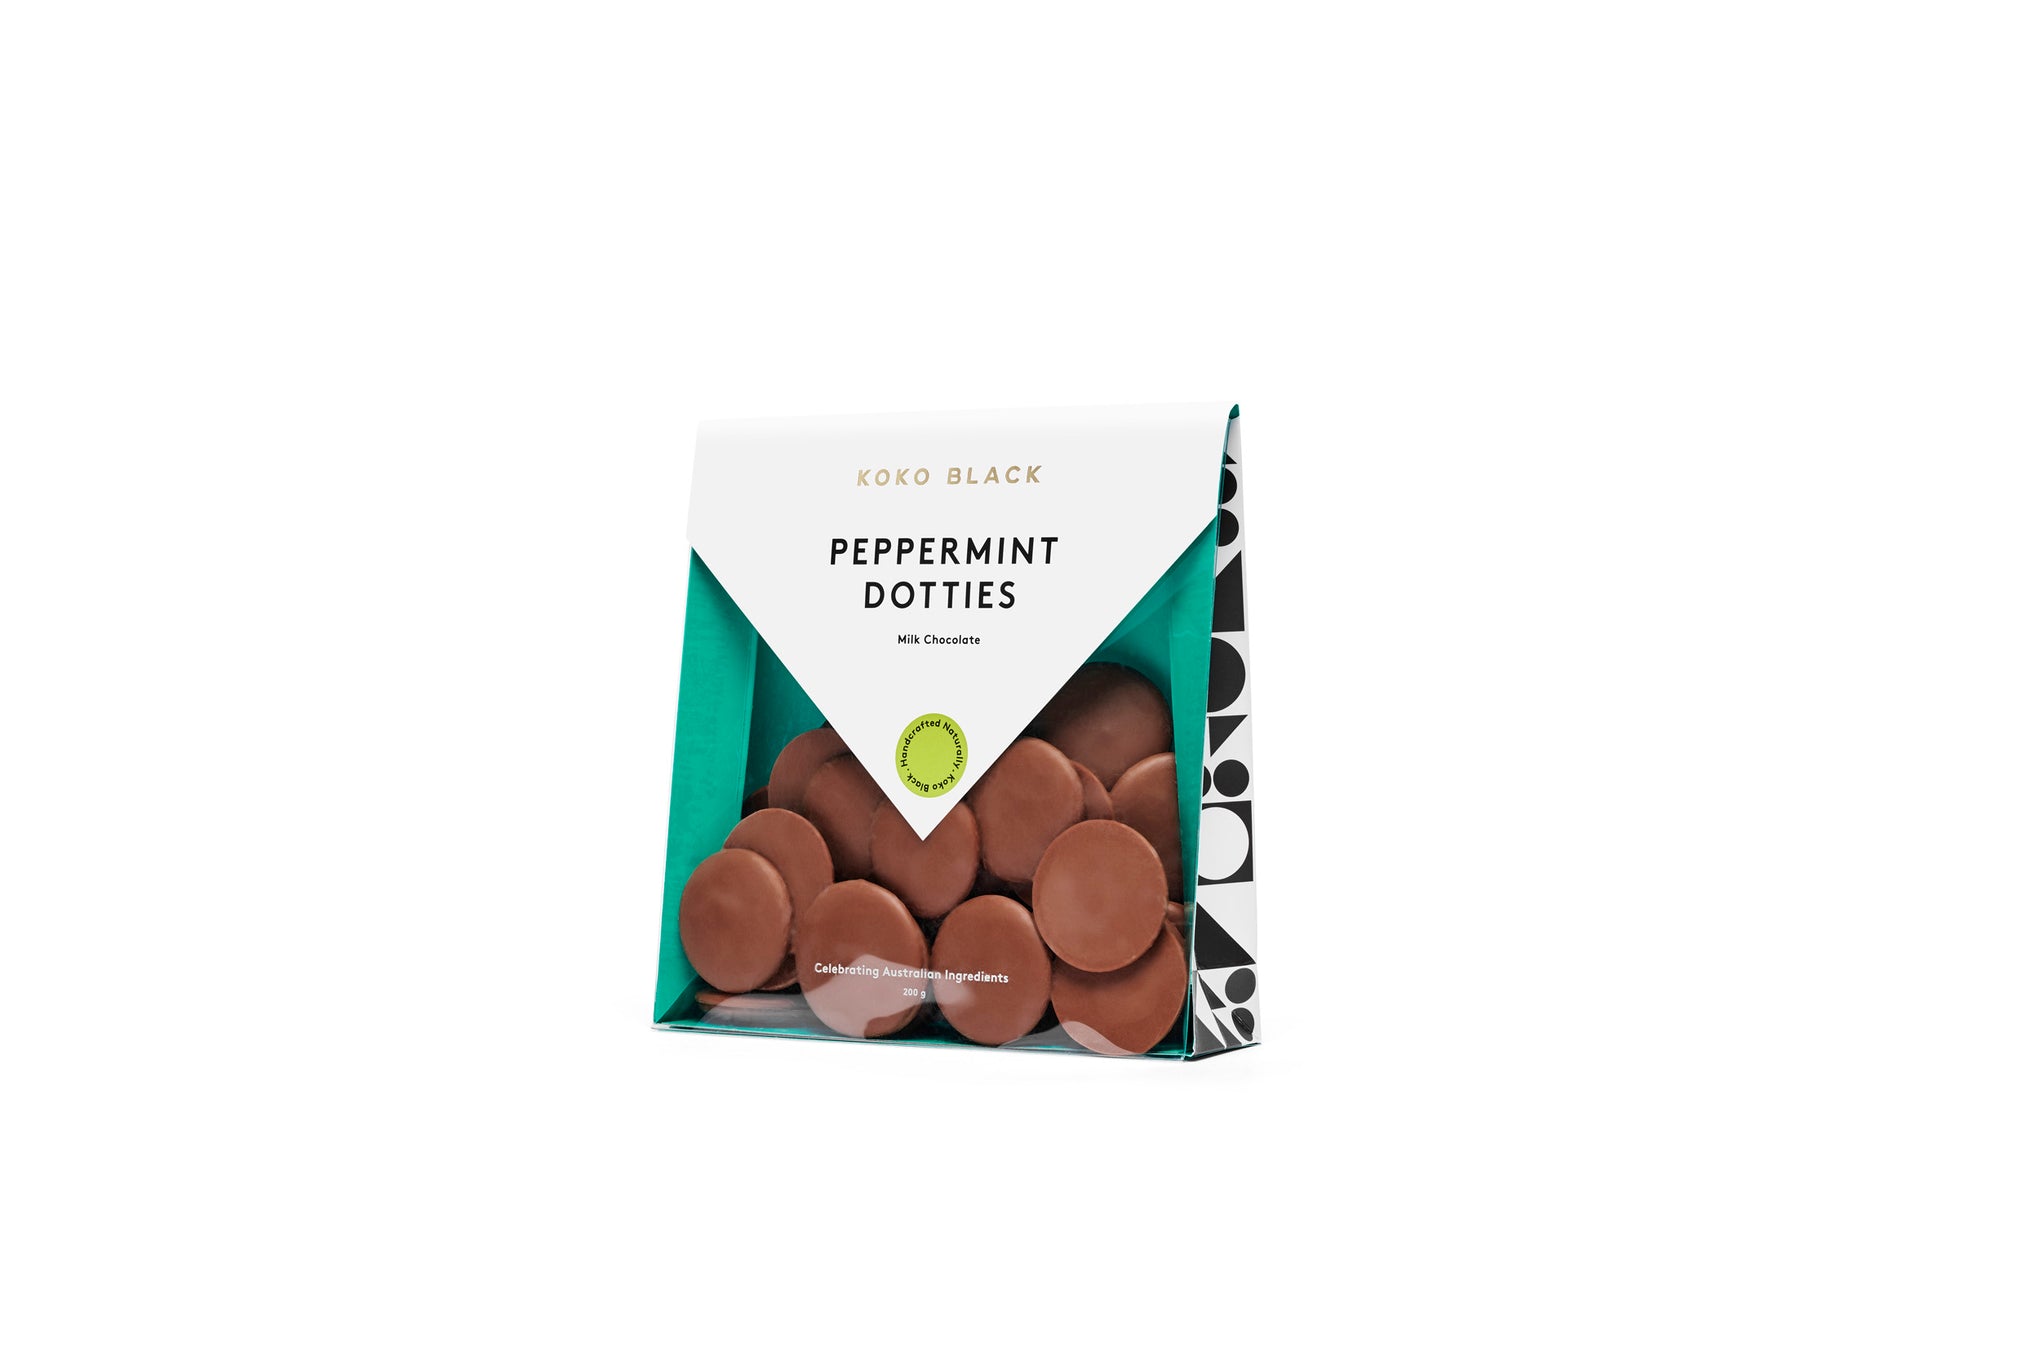 Peppermint Dotties | Milk Chocolate